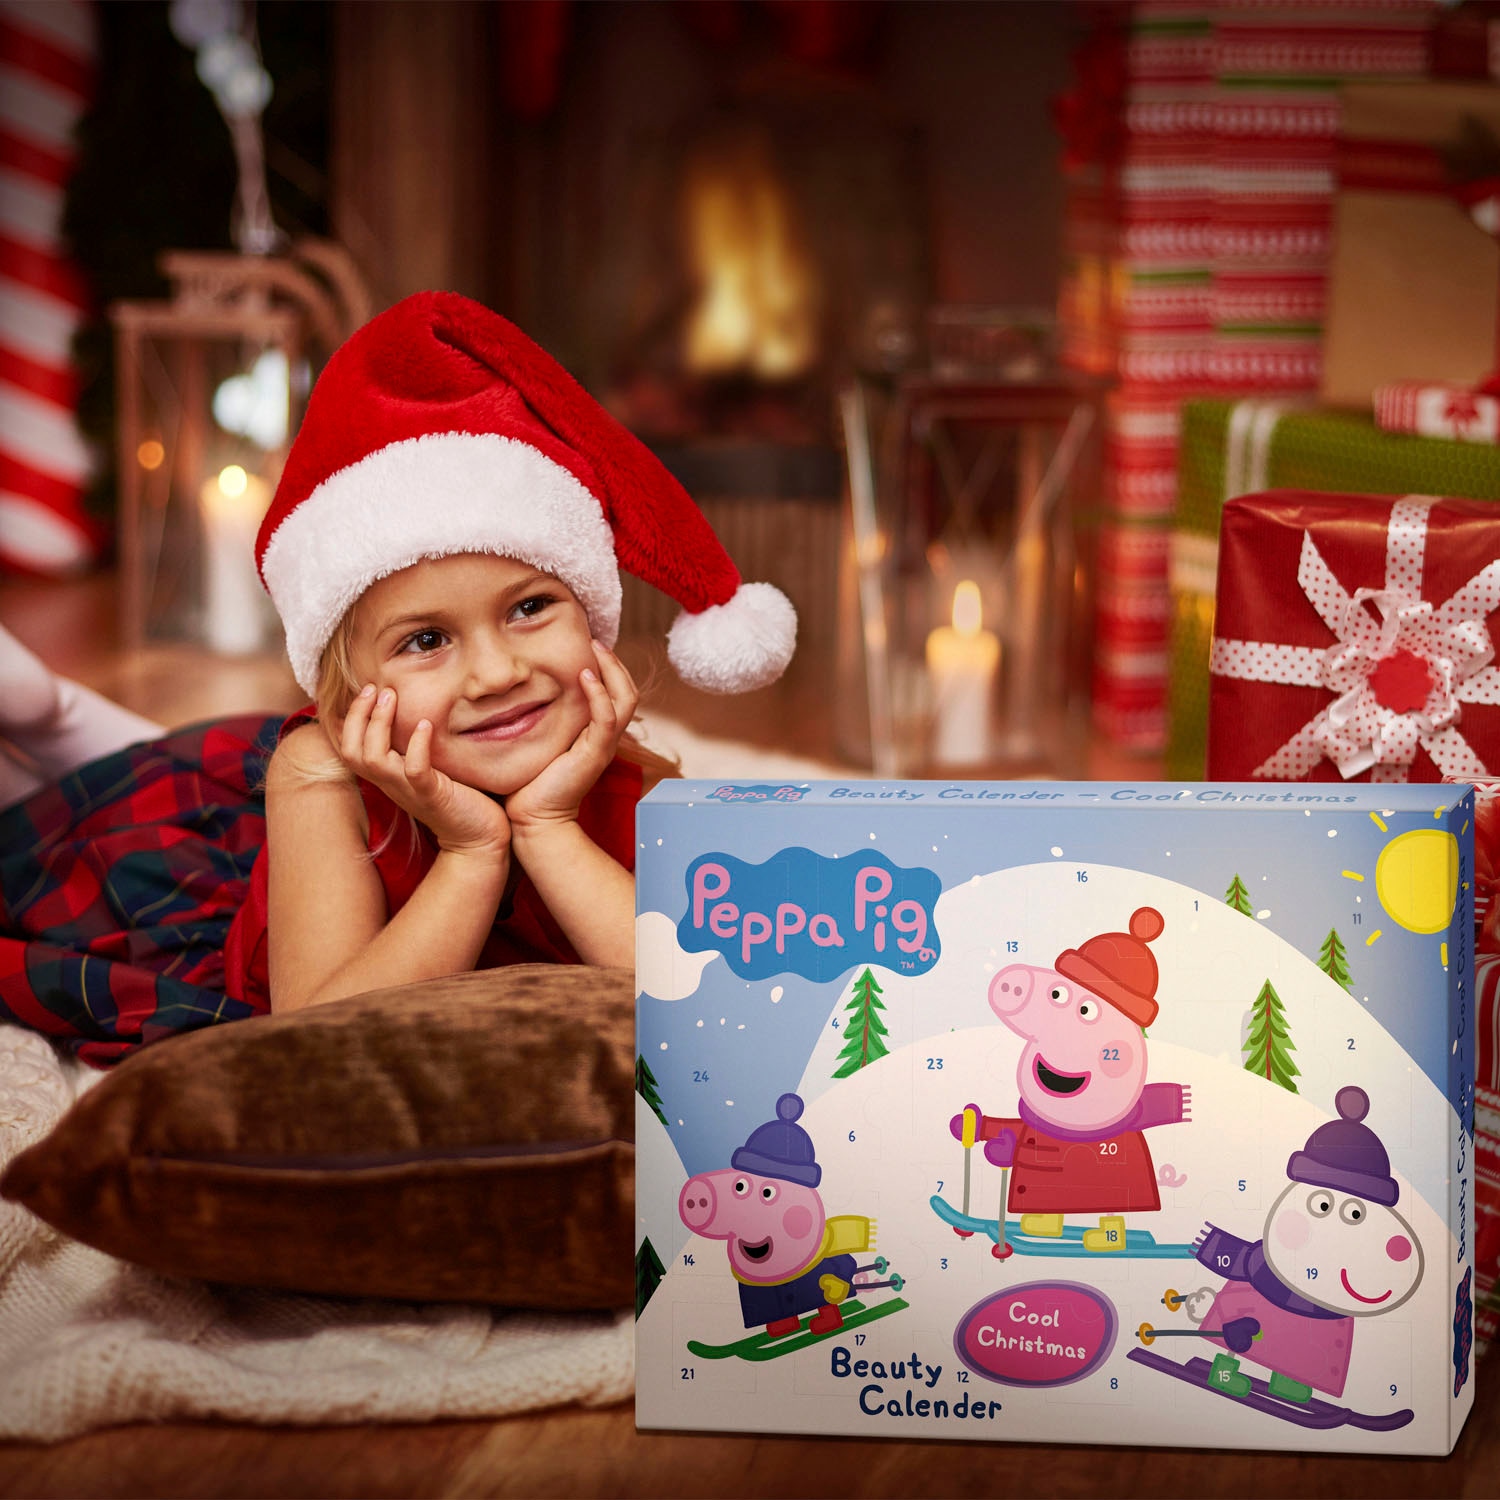 Pig Jahren Fun 6 Peppa Calendar & »Peppa Bath ab \'Cool BAUR Christmas\'«, | Pig Adventskalender